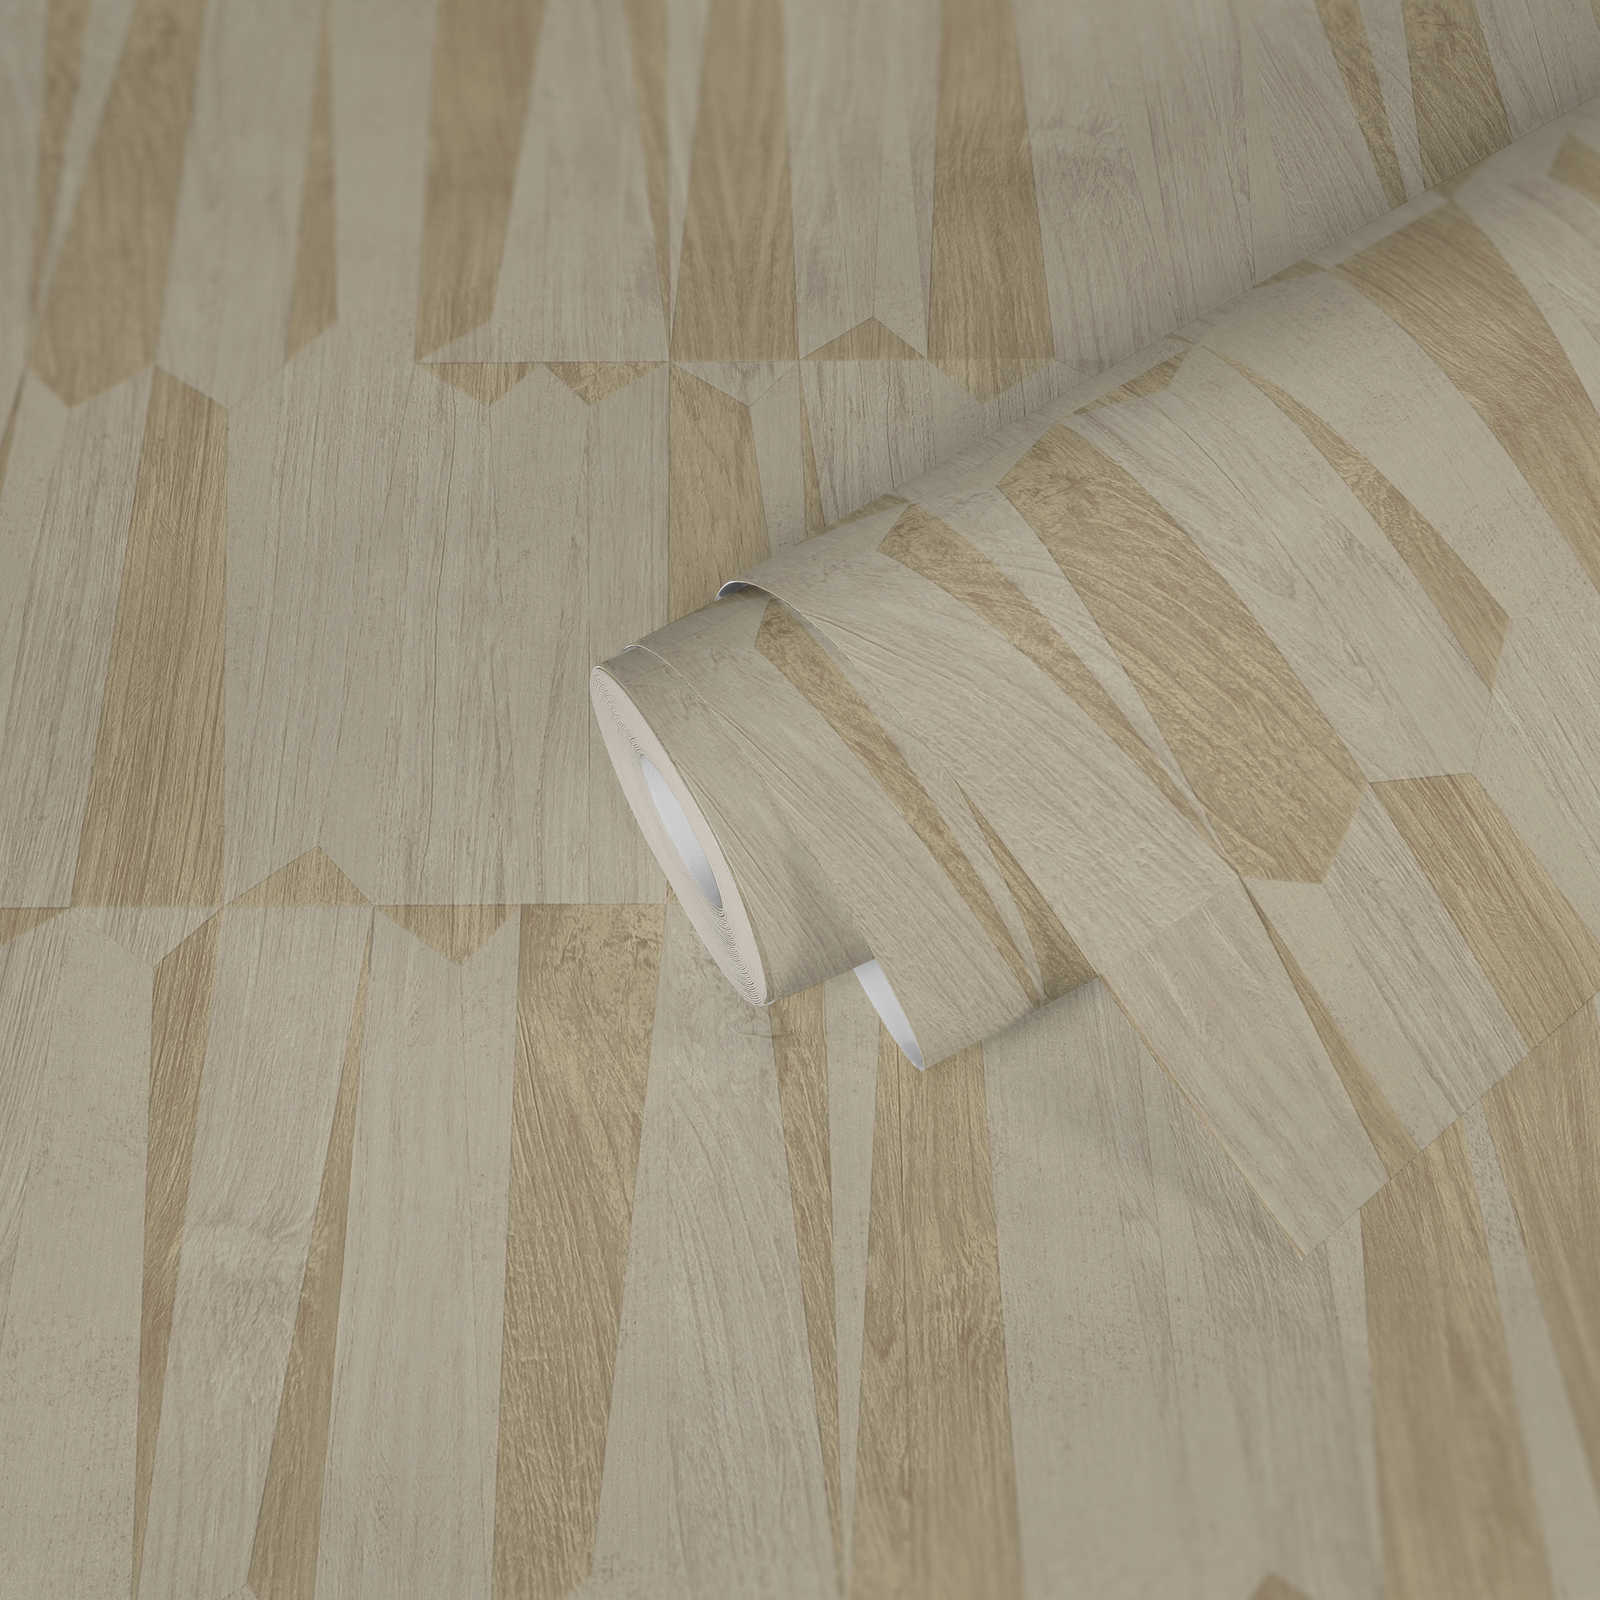             Metallic Tapete mit Holzoptik im Facetten-Muster – Beige, Grau
        